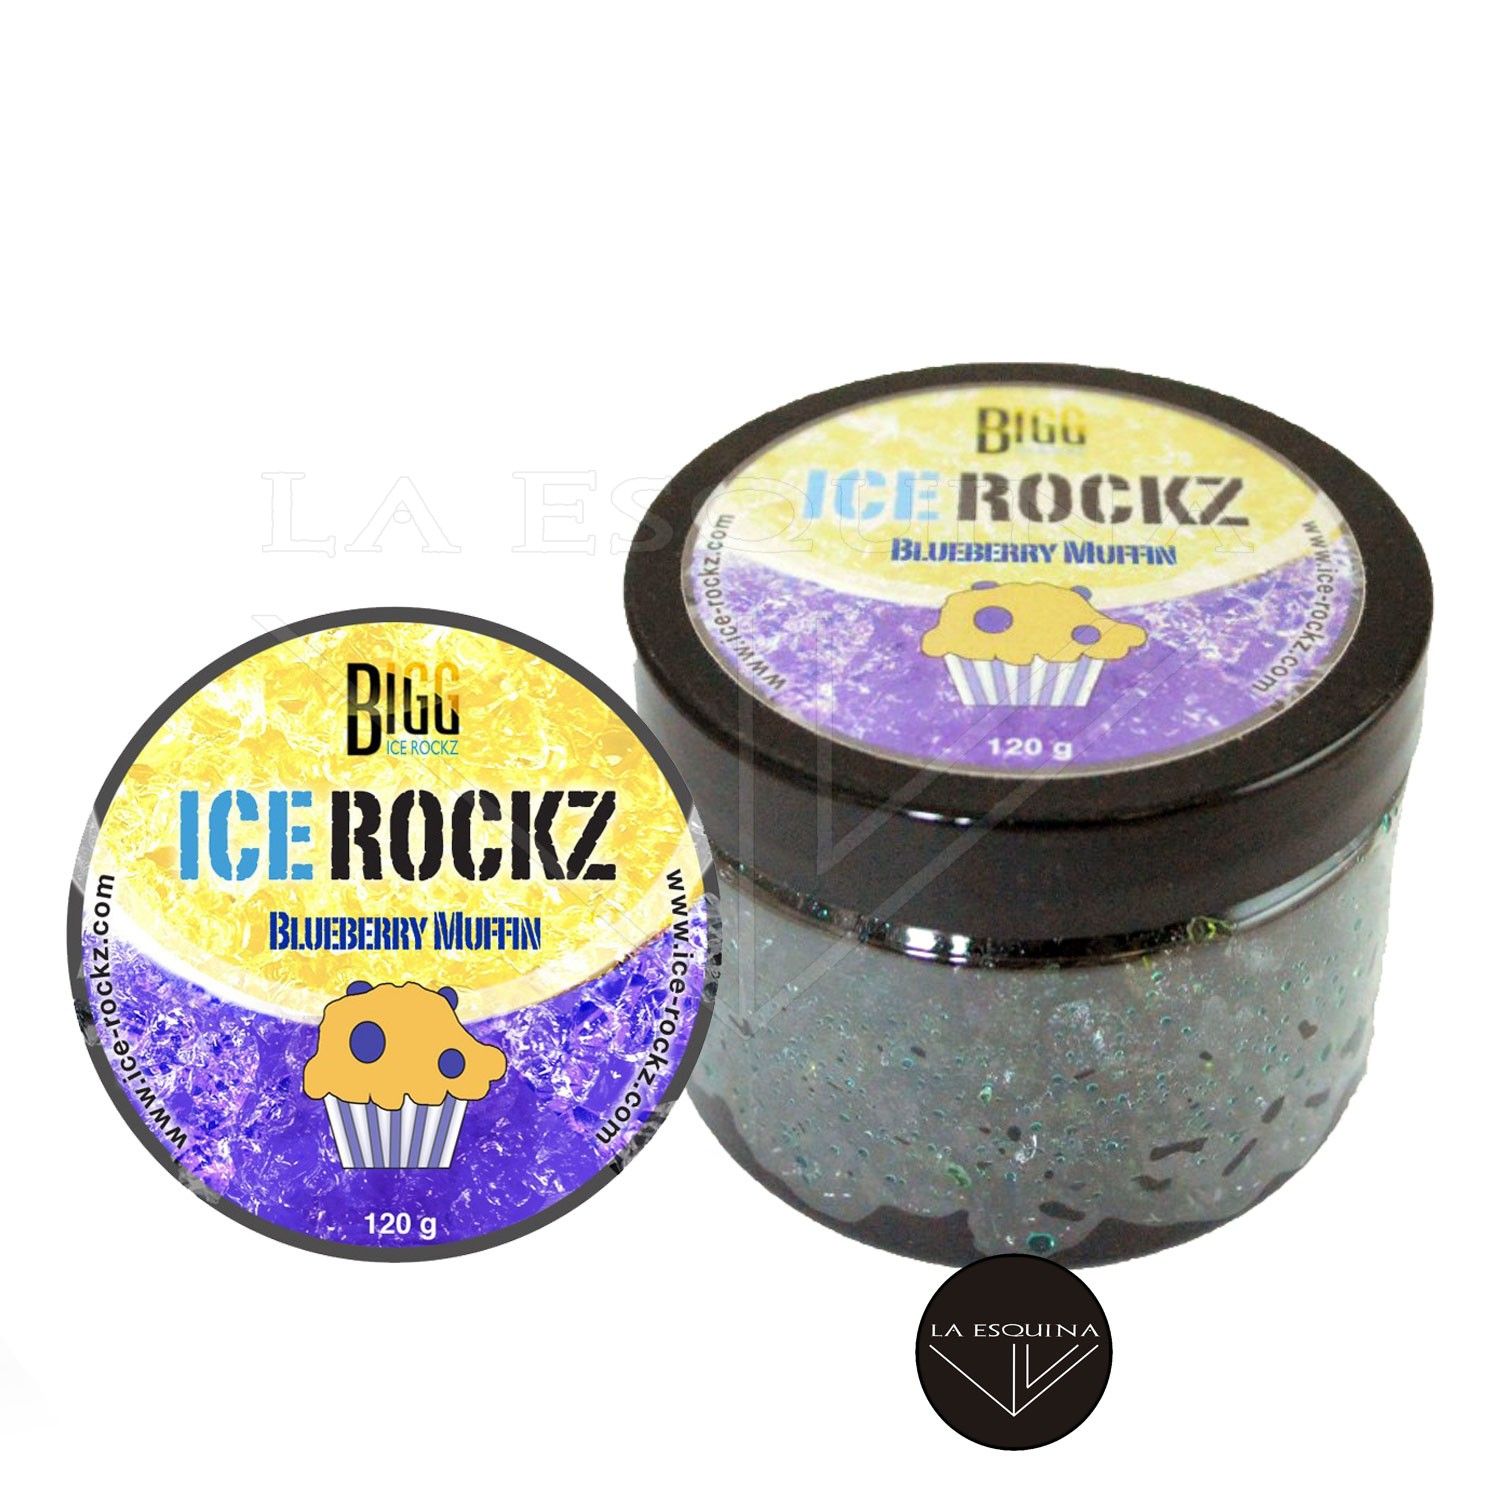 Gel Rock de Cachimba BIGG ICE ROCKZ – 120 g. – Blueberry Muffin